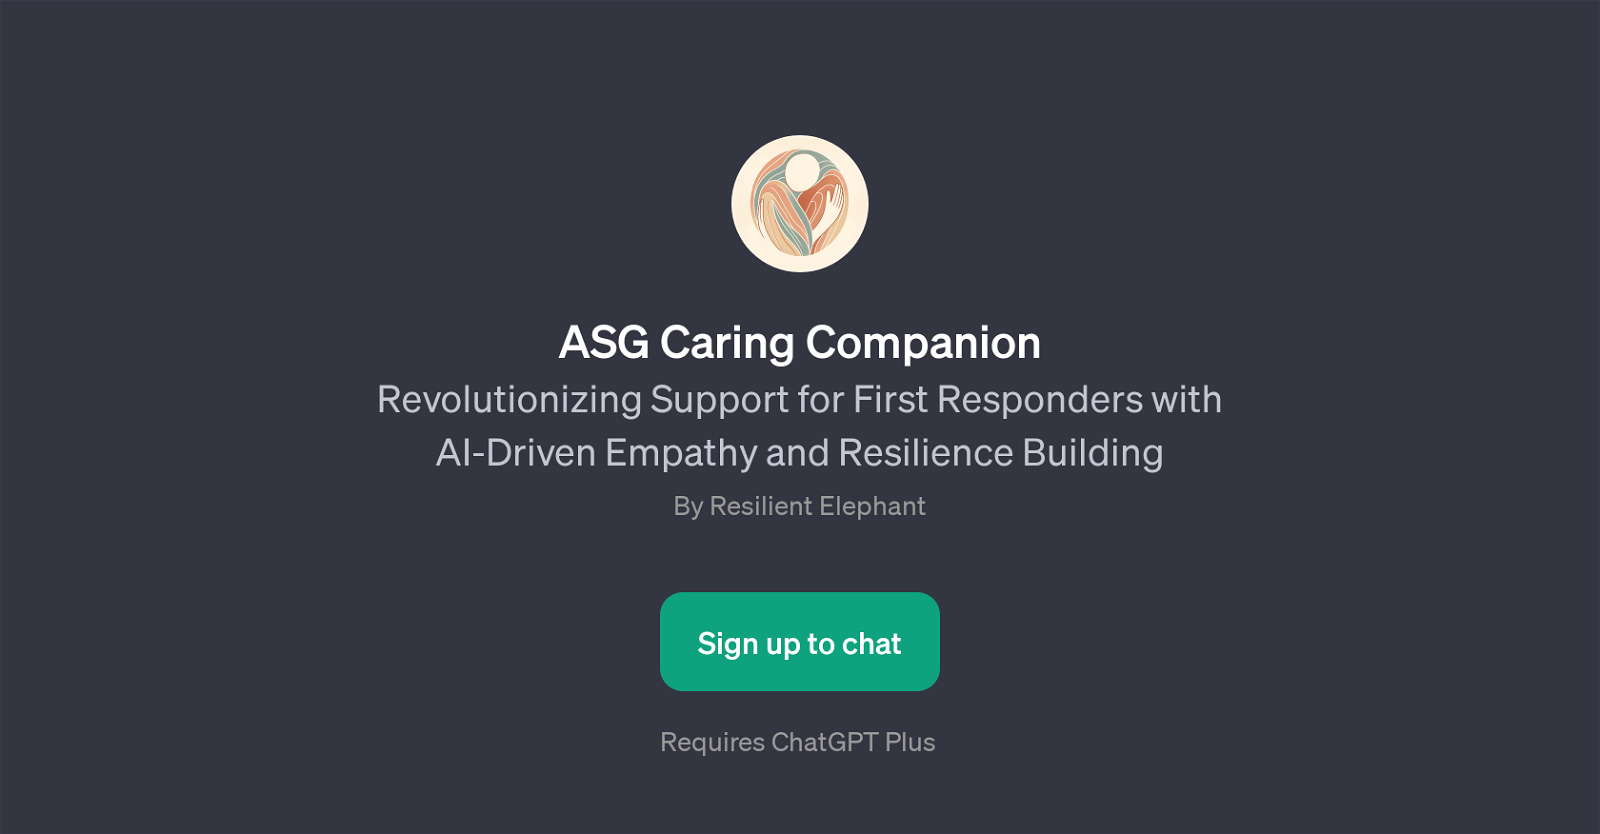 ASG Caring Companion website